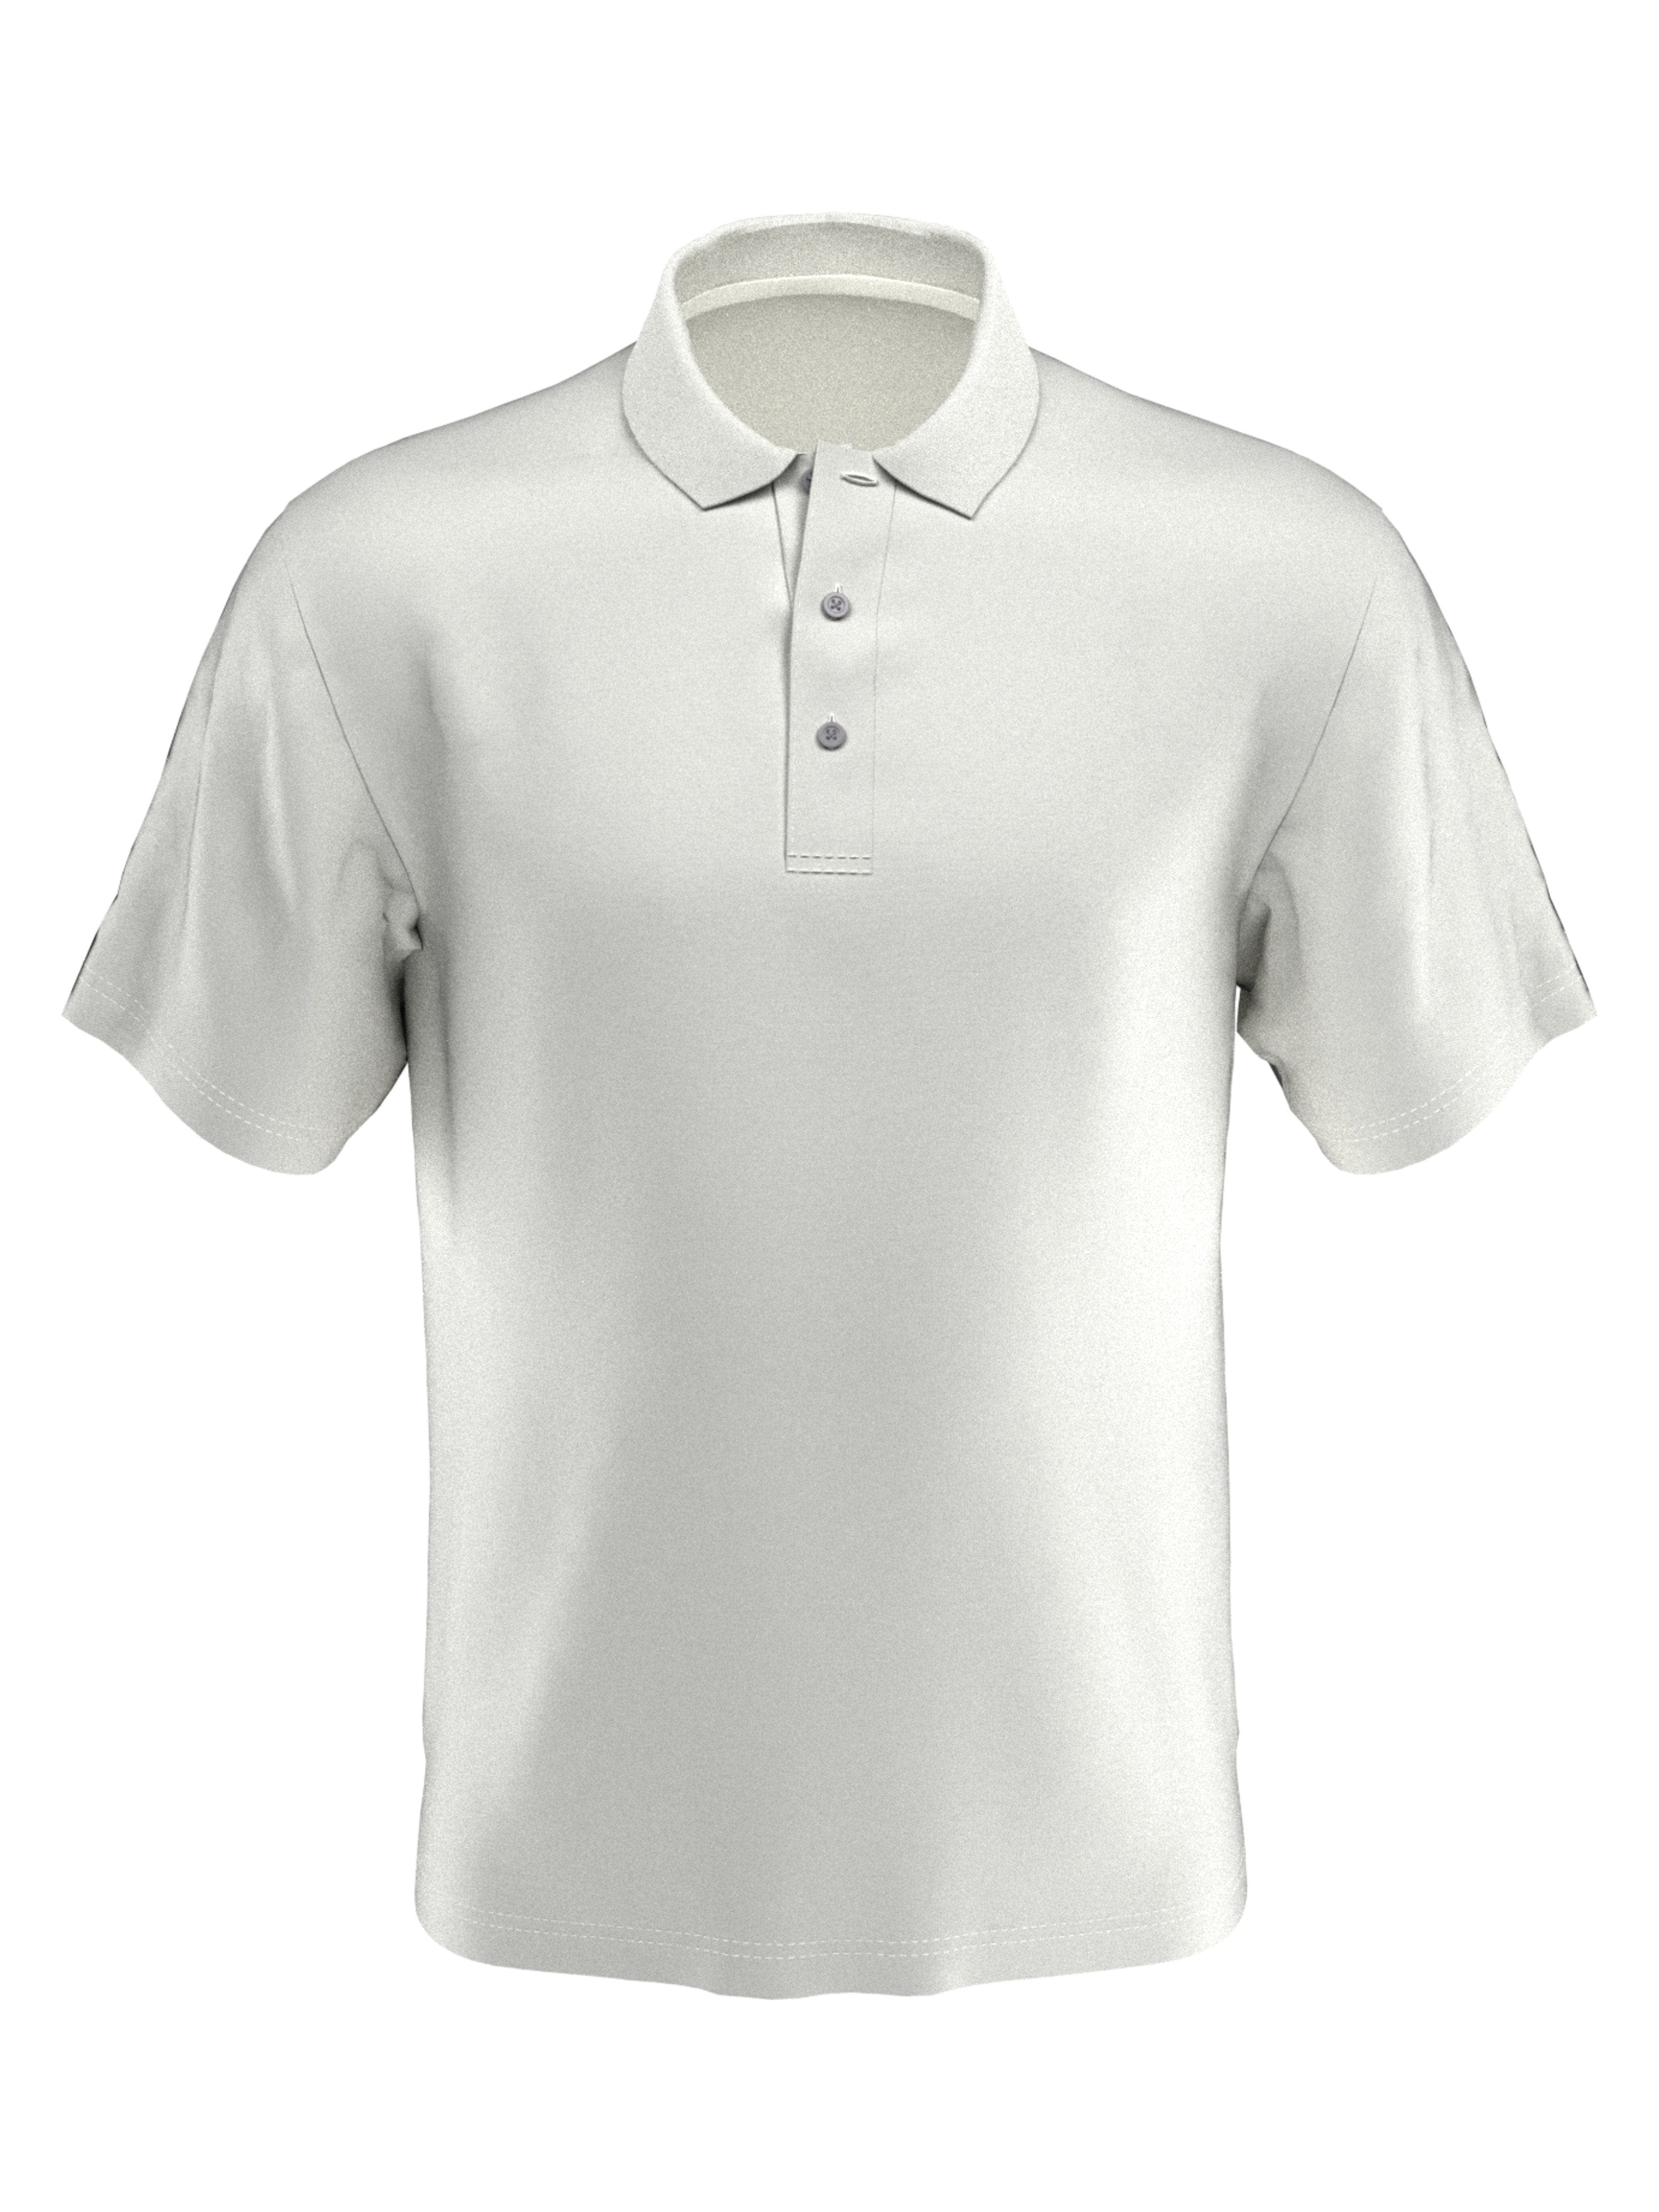 PGA TOUR Apparel Boys Short Sleeve AirFlux™ Polo Shirt, Size Large, White, 100% Polyester | Golf Apparel Shop